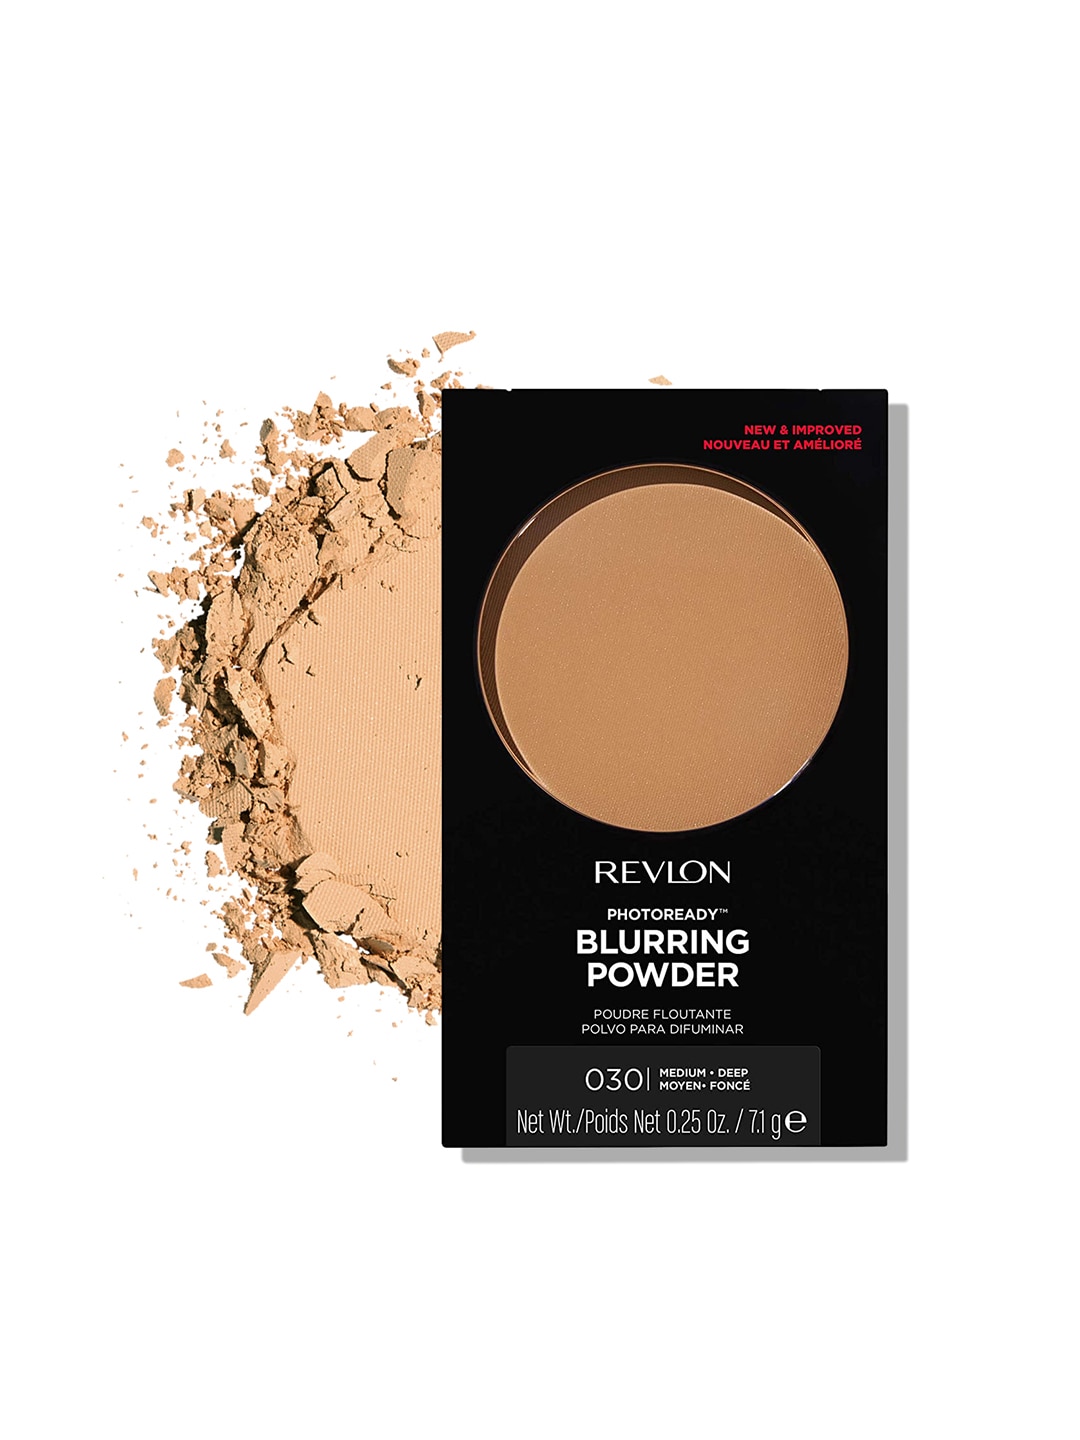 Revlon Photoready Blurring Powder - Medium/Deep 030 Price in India